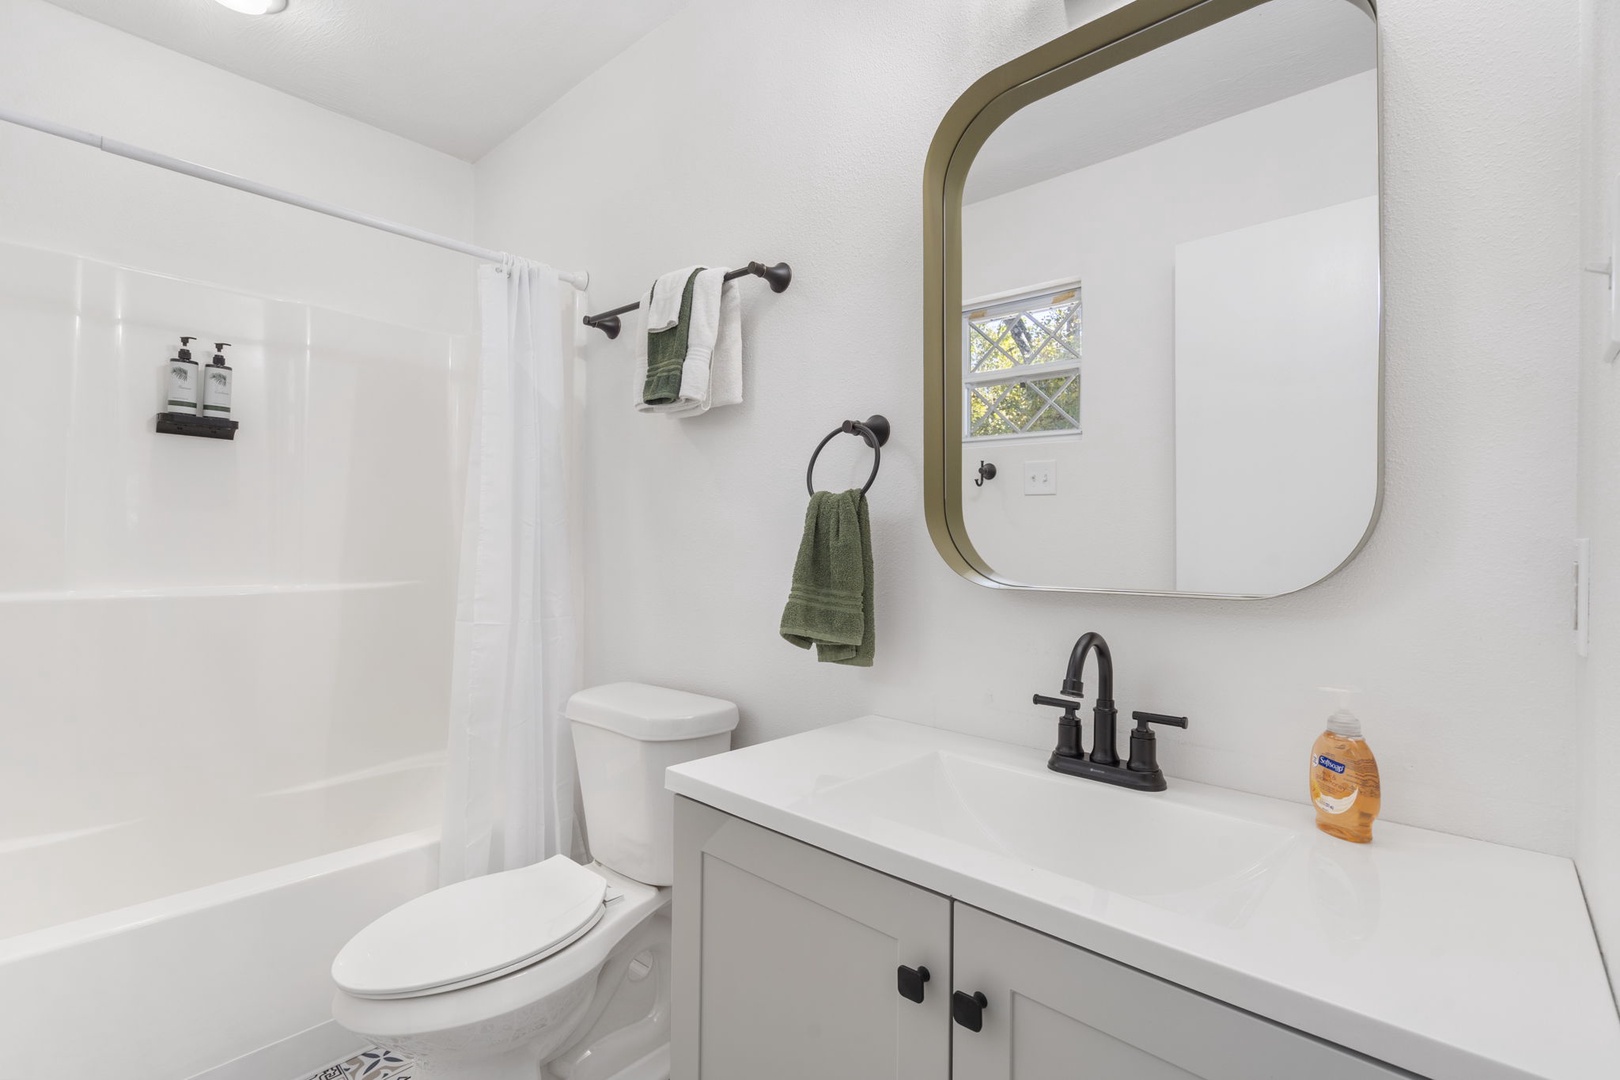 Unit 41: The king en suite bathroom includes a single vanity & shower/tub combo